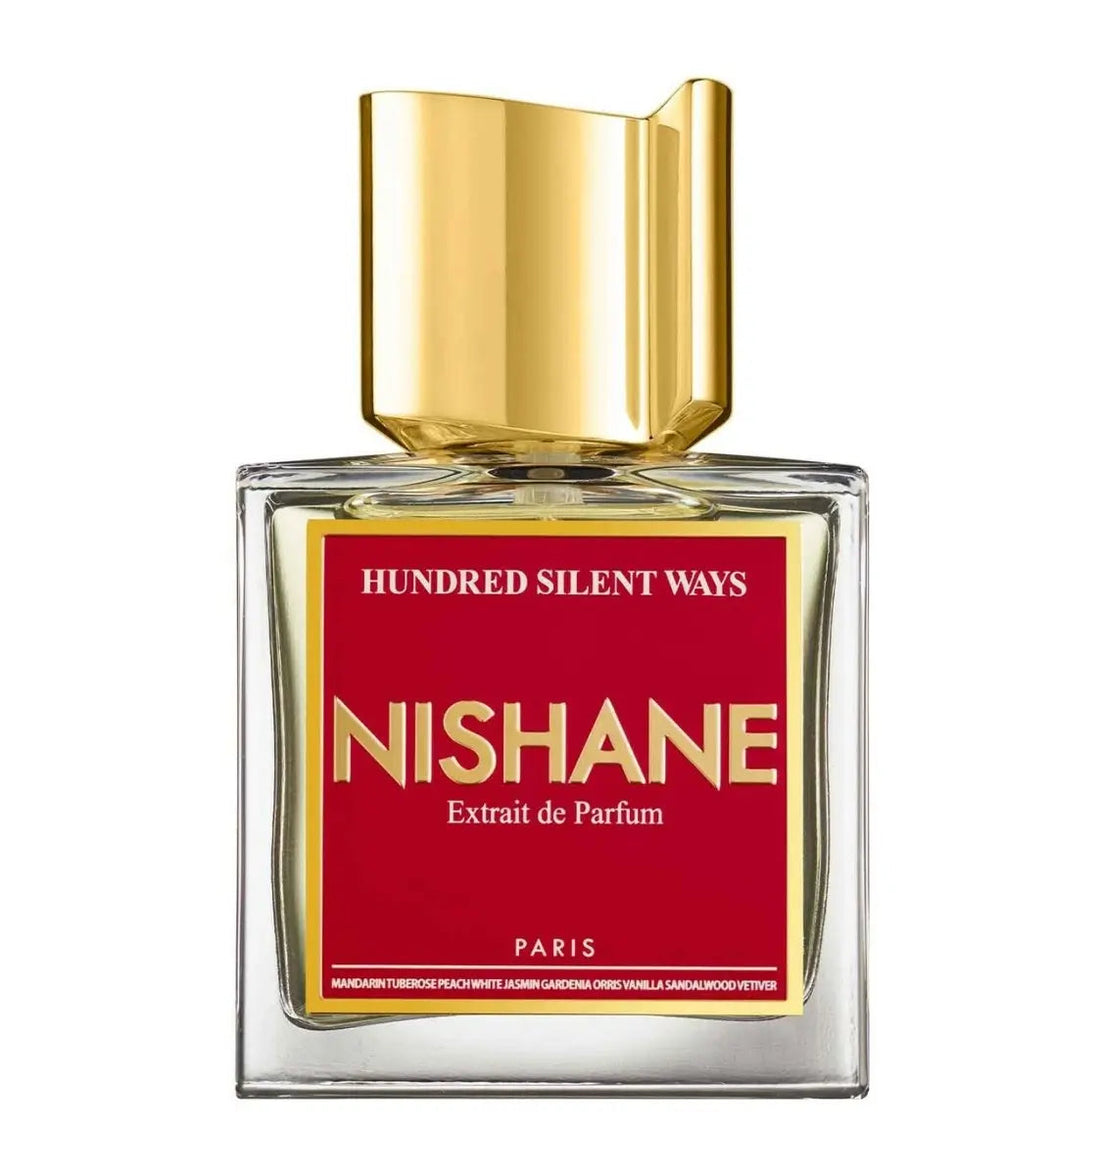 Extracto de perfume Nishane Hundred Silent Ways - 100 ml